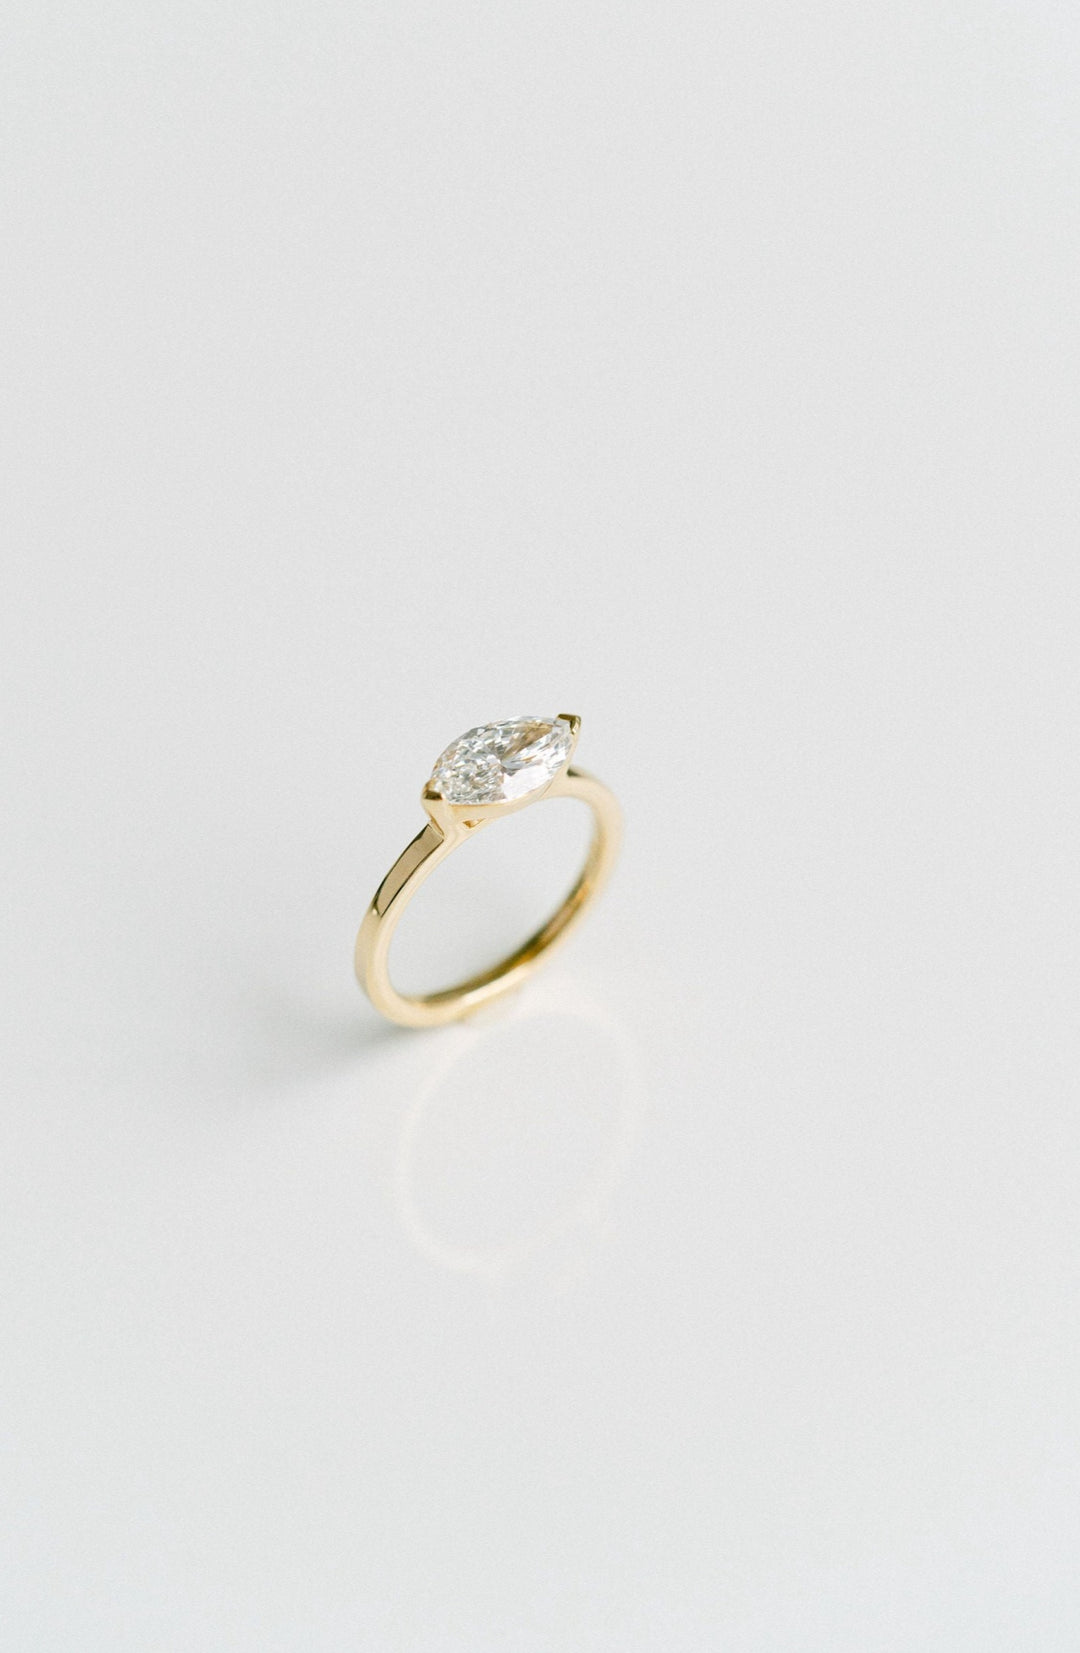 Marquise Cut East-West Half Bezel Diamond Engagement Ring, 14k Yellow Gold